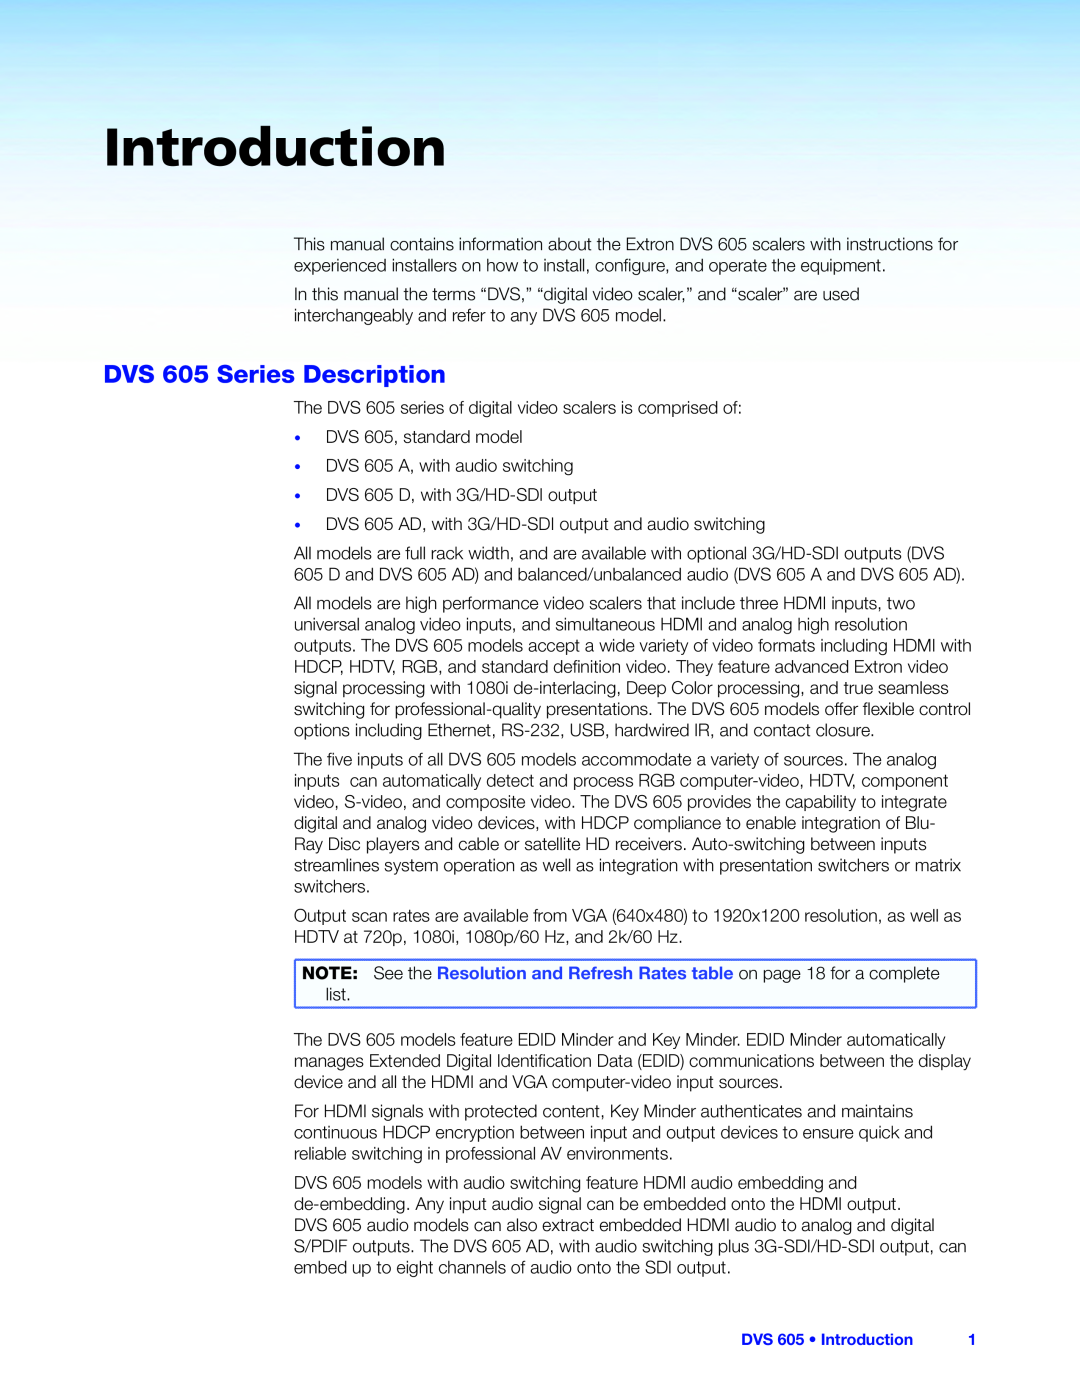 Extron electronic manual Introduction, DVS 605 Series Description 